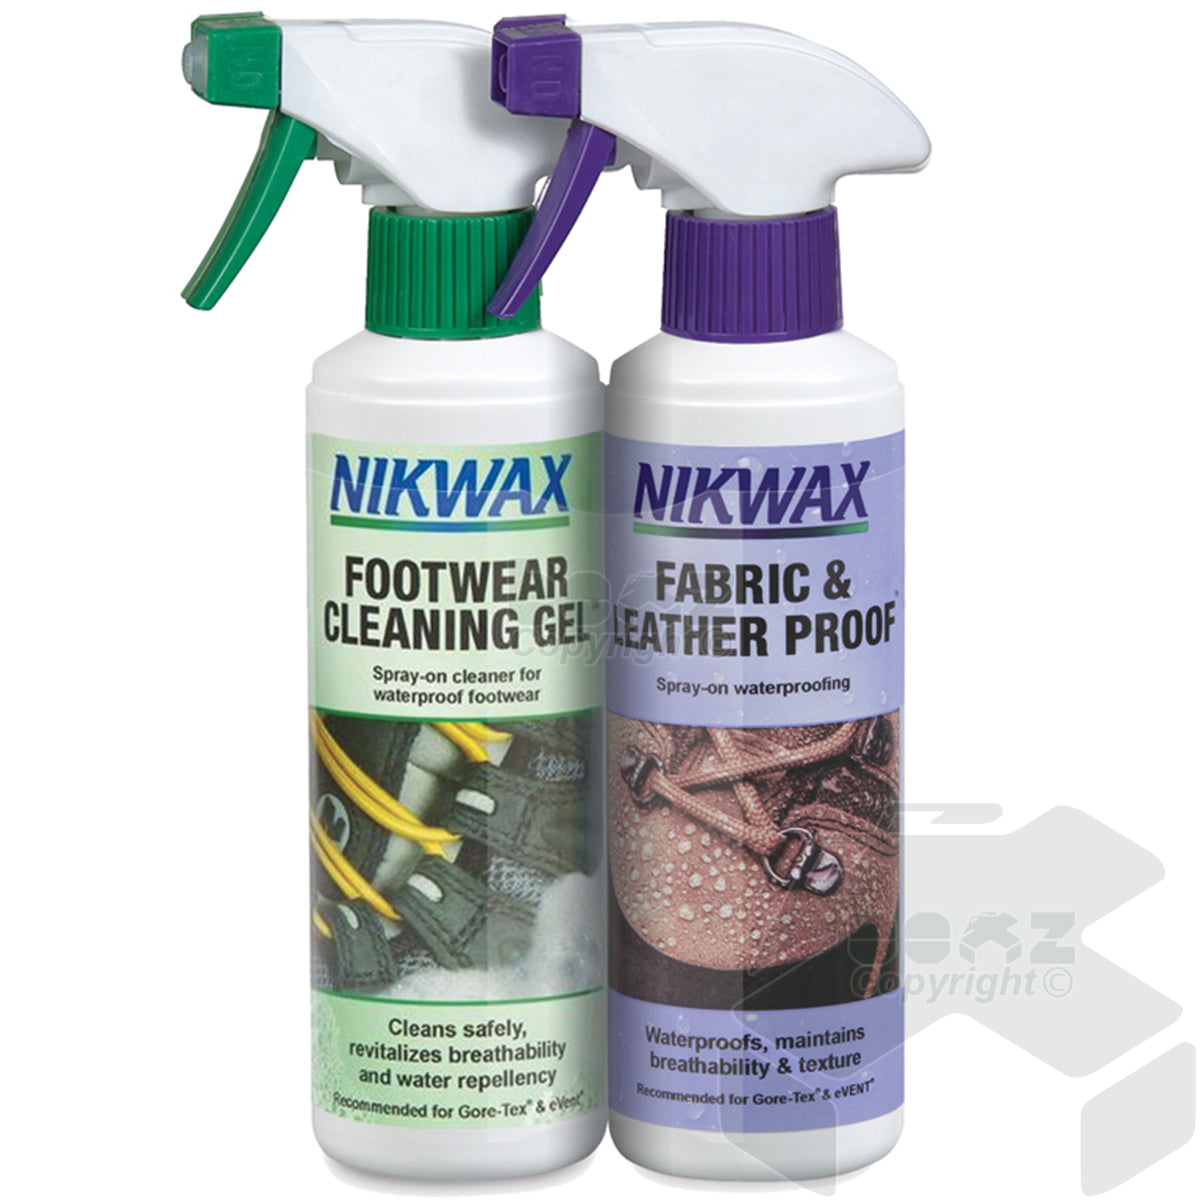 Nikwax Footwear Cleaning Gel Fabric Leather Proof Twin Pack 300ml